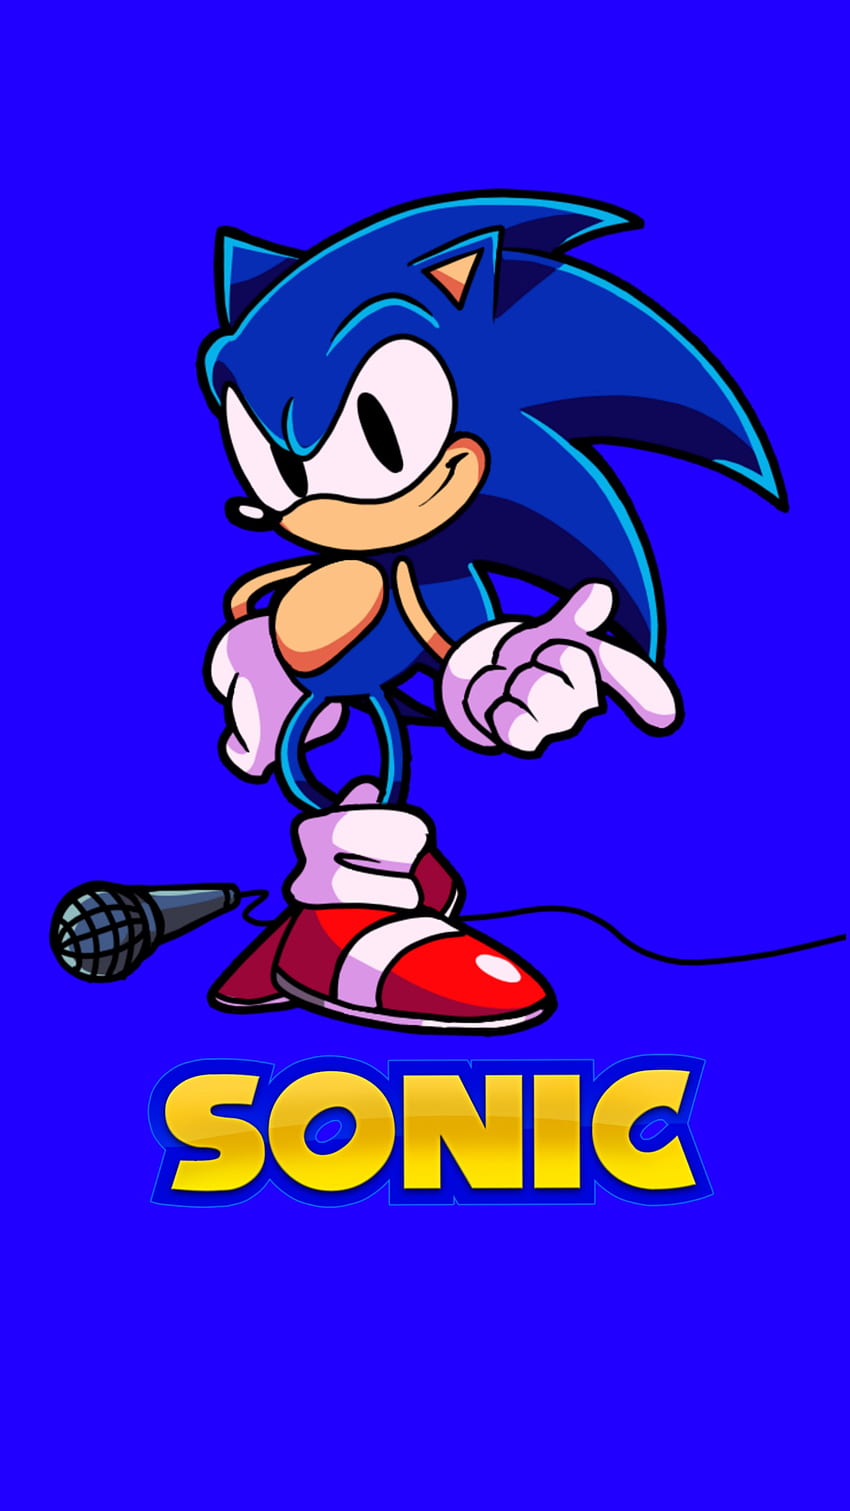 Sonic Boy X (anime version) by SonicBoyX on DeviantArt